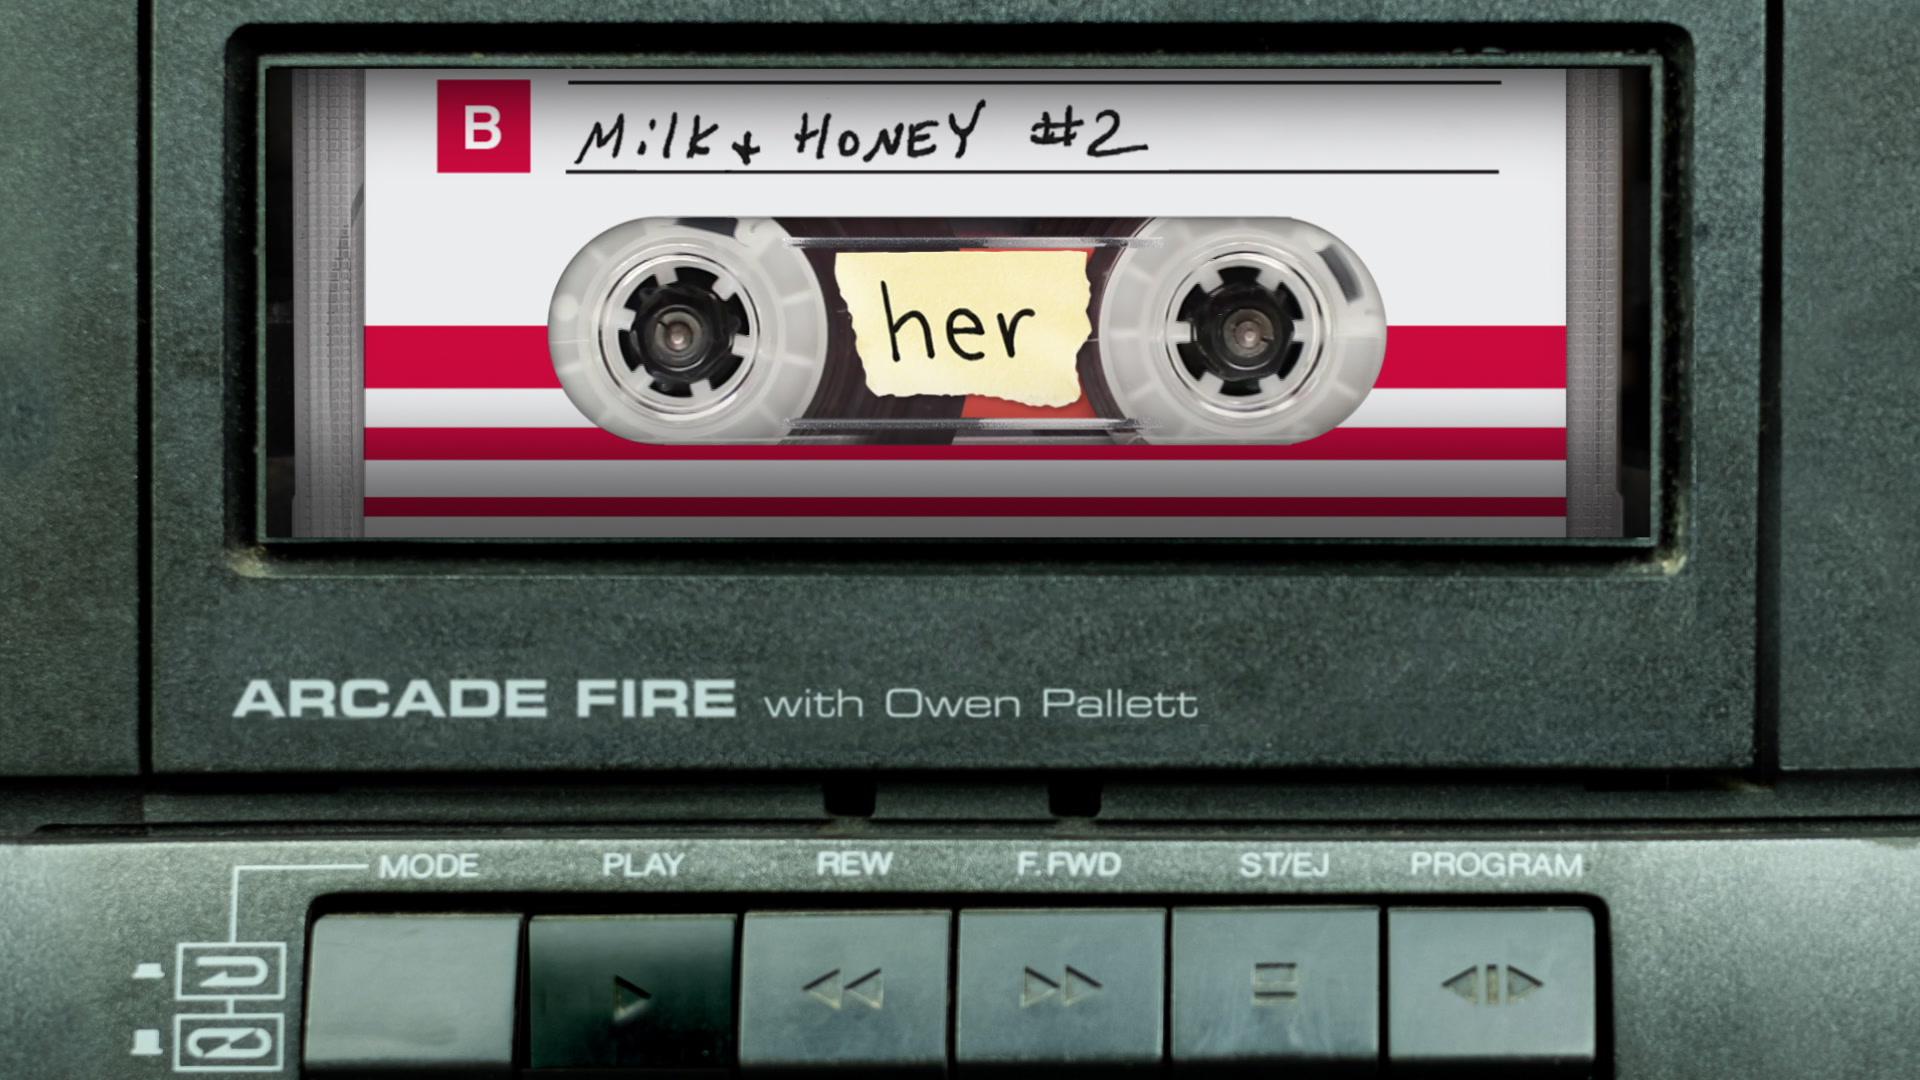 Arcade Fire - Milk & Honey #2 (Official Audio)